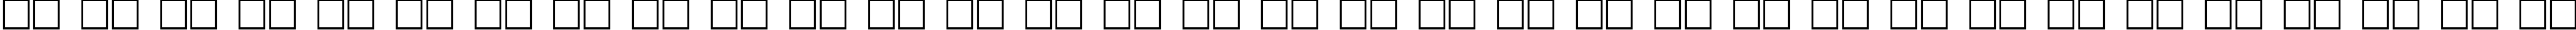 Пример написания русского алфавита шрифтом FrightWrite1 Medium